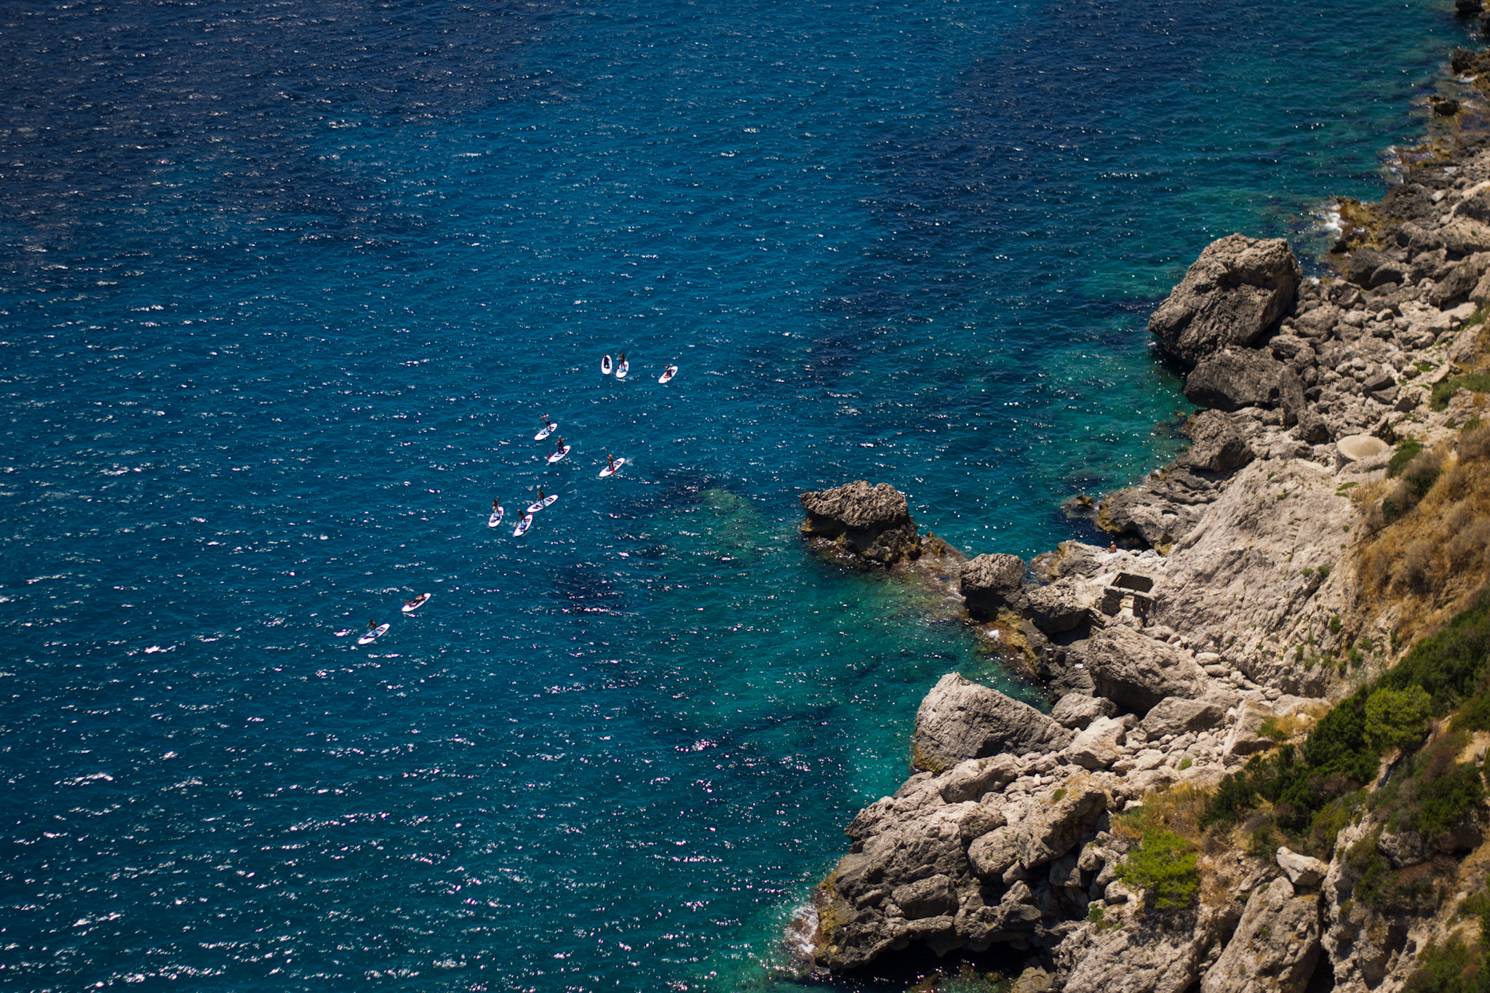 A bird’s-eye view of a light blue ocean with a rocky coastline.